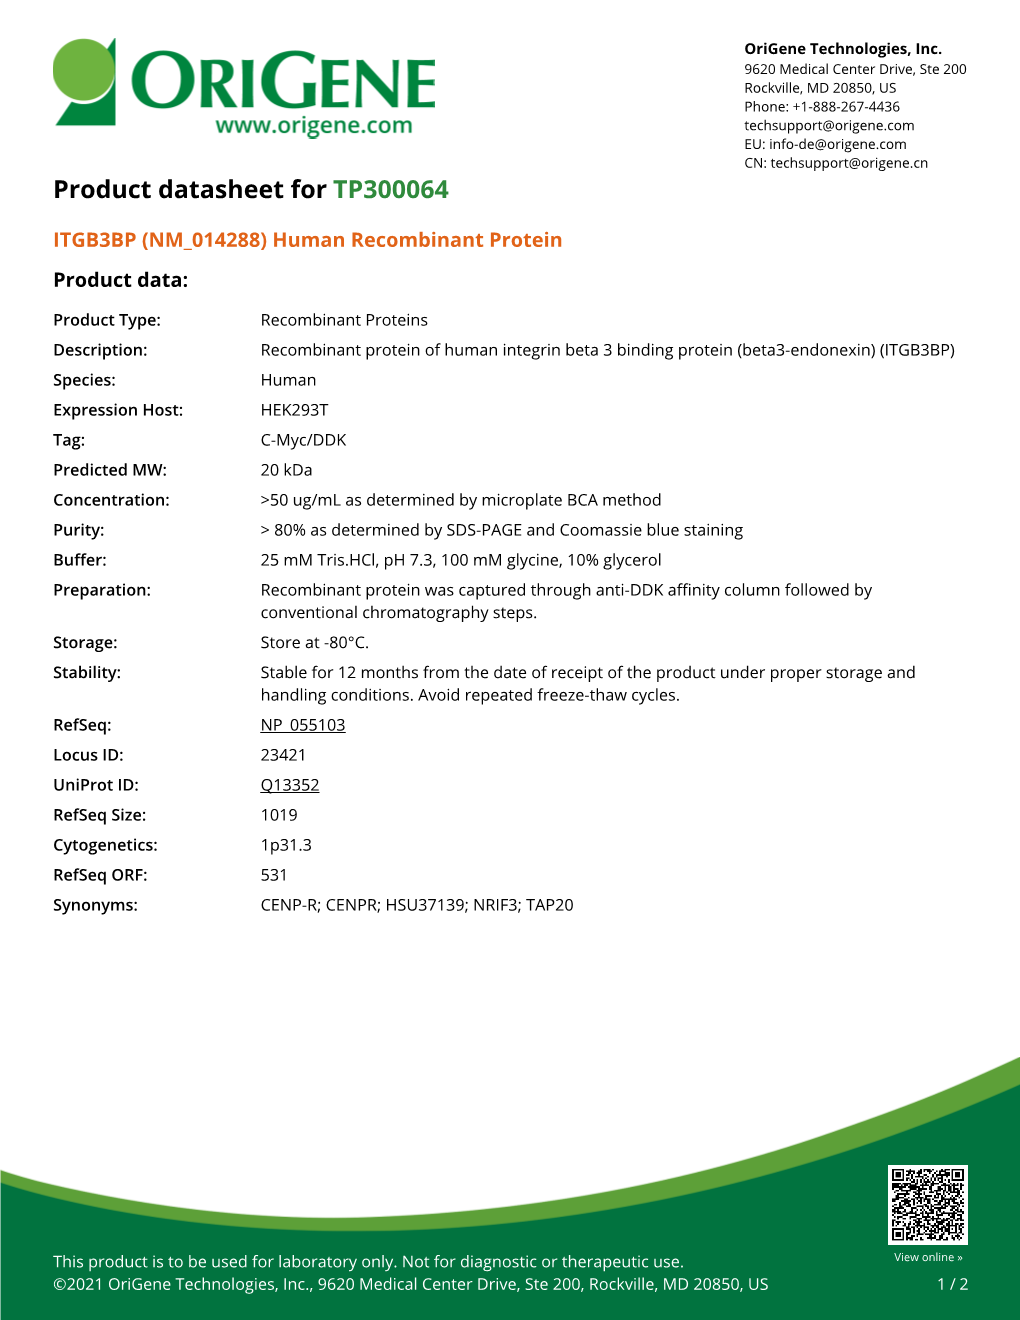 ITGB3BP (NM 014288) Human Recombinant Protein – TP300064